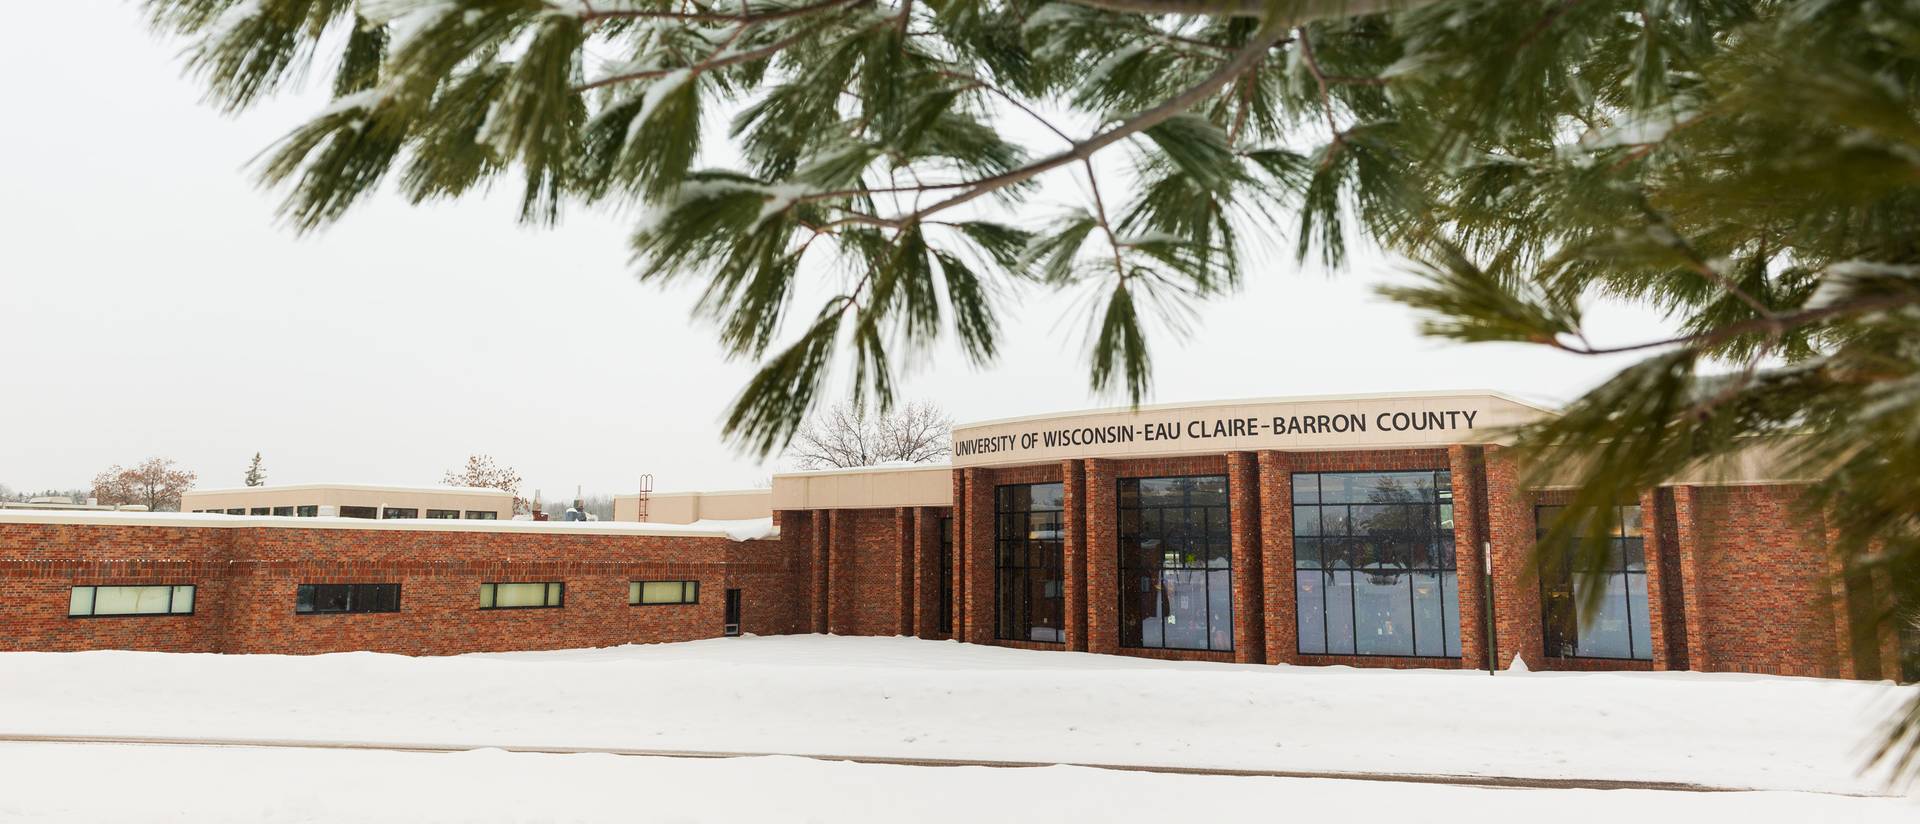 UW-Eau Claire – Barron County in winter